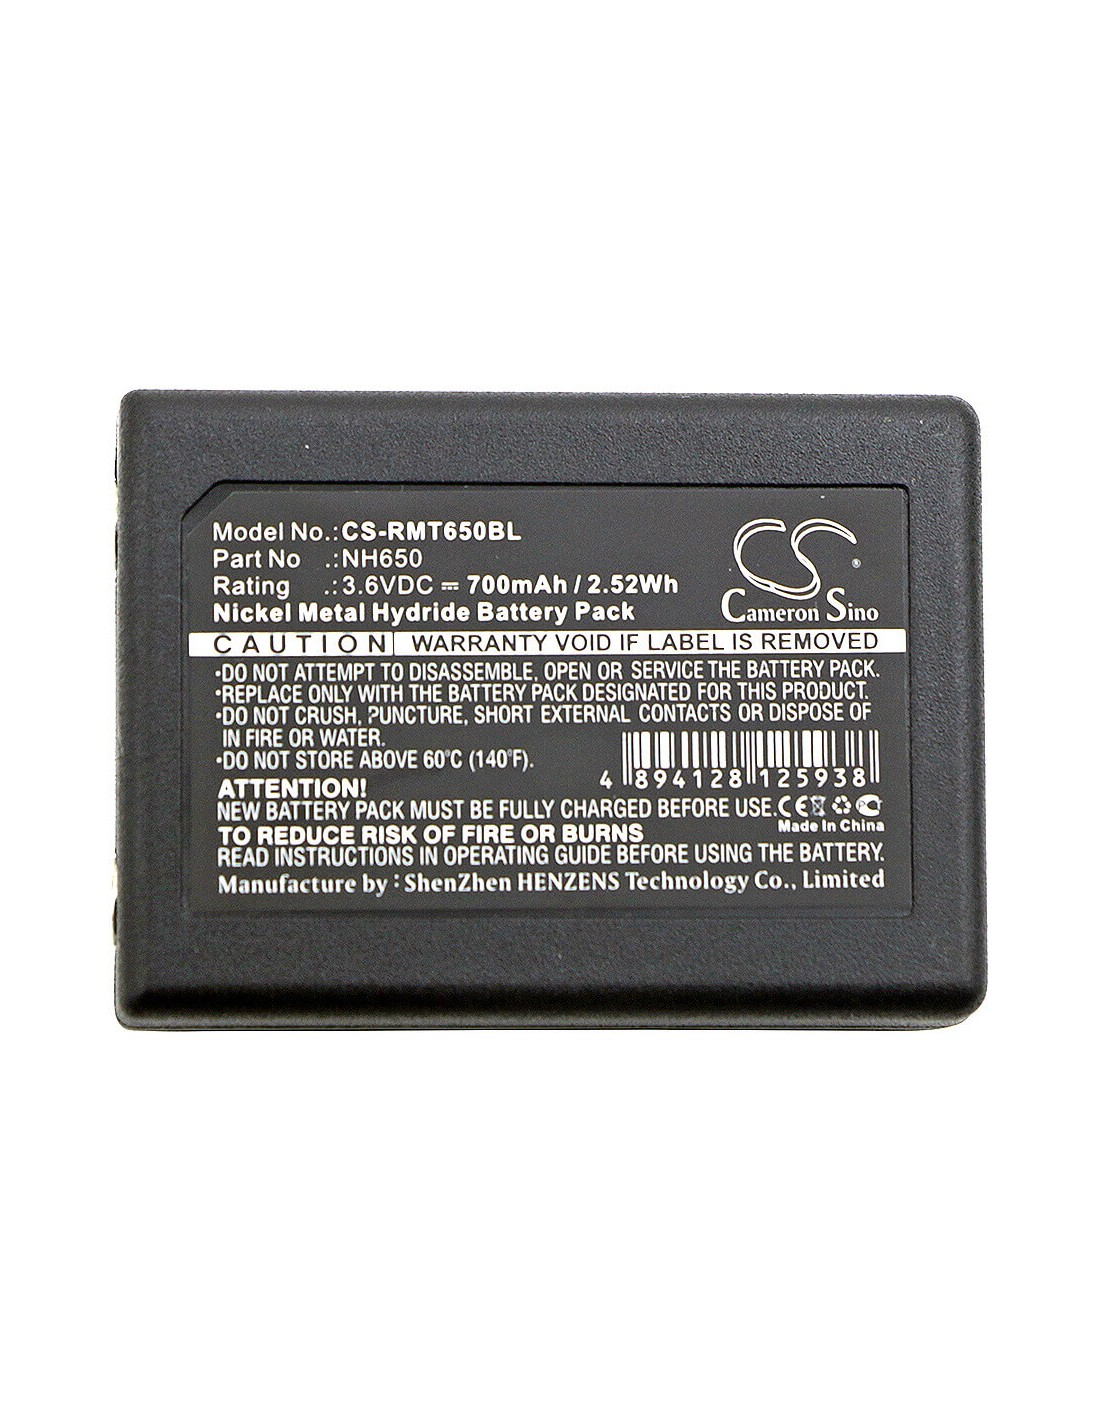 Battery for Ravioli Joy, Lnh650 3.6V, 700mAh - 2.52Wh